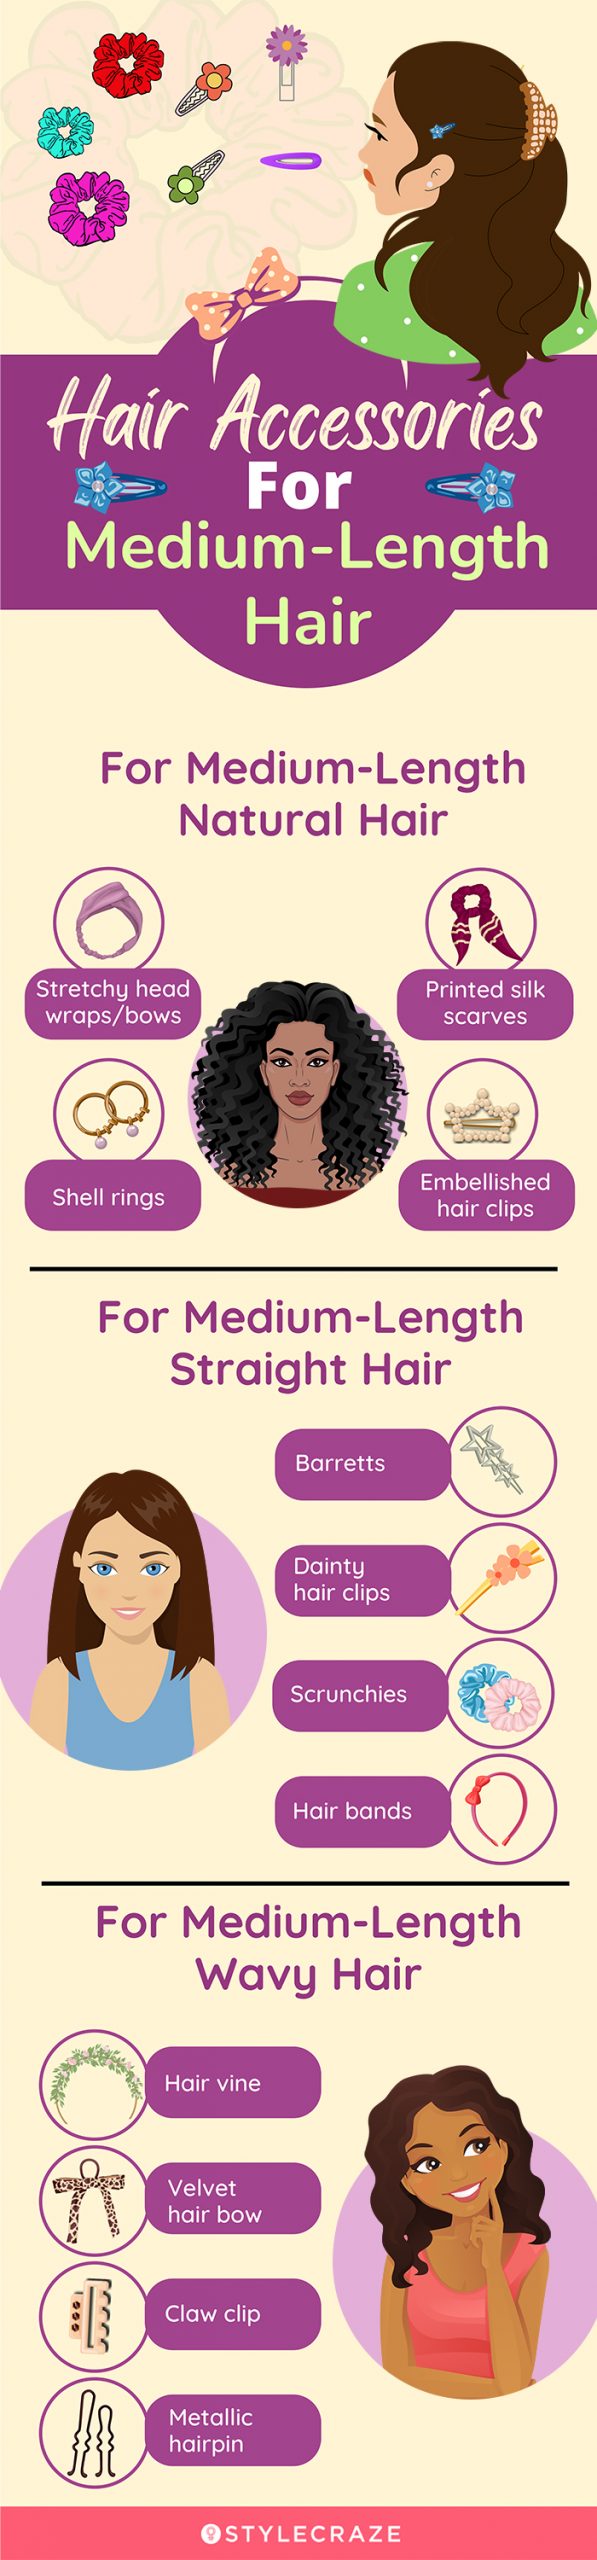 hair accessories for medium length hair (infographic)